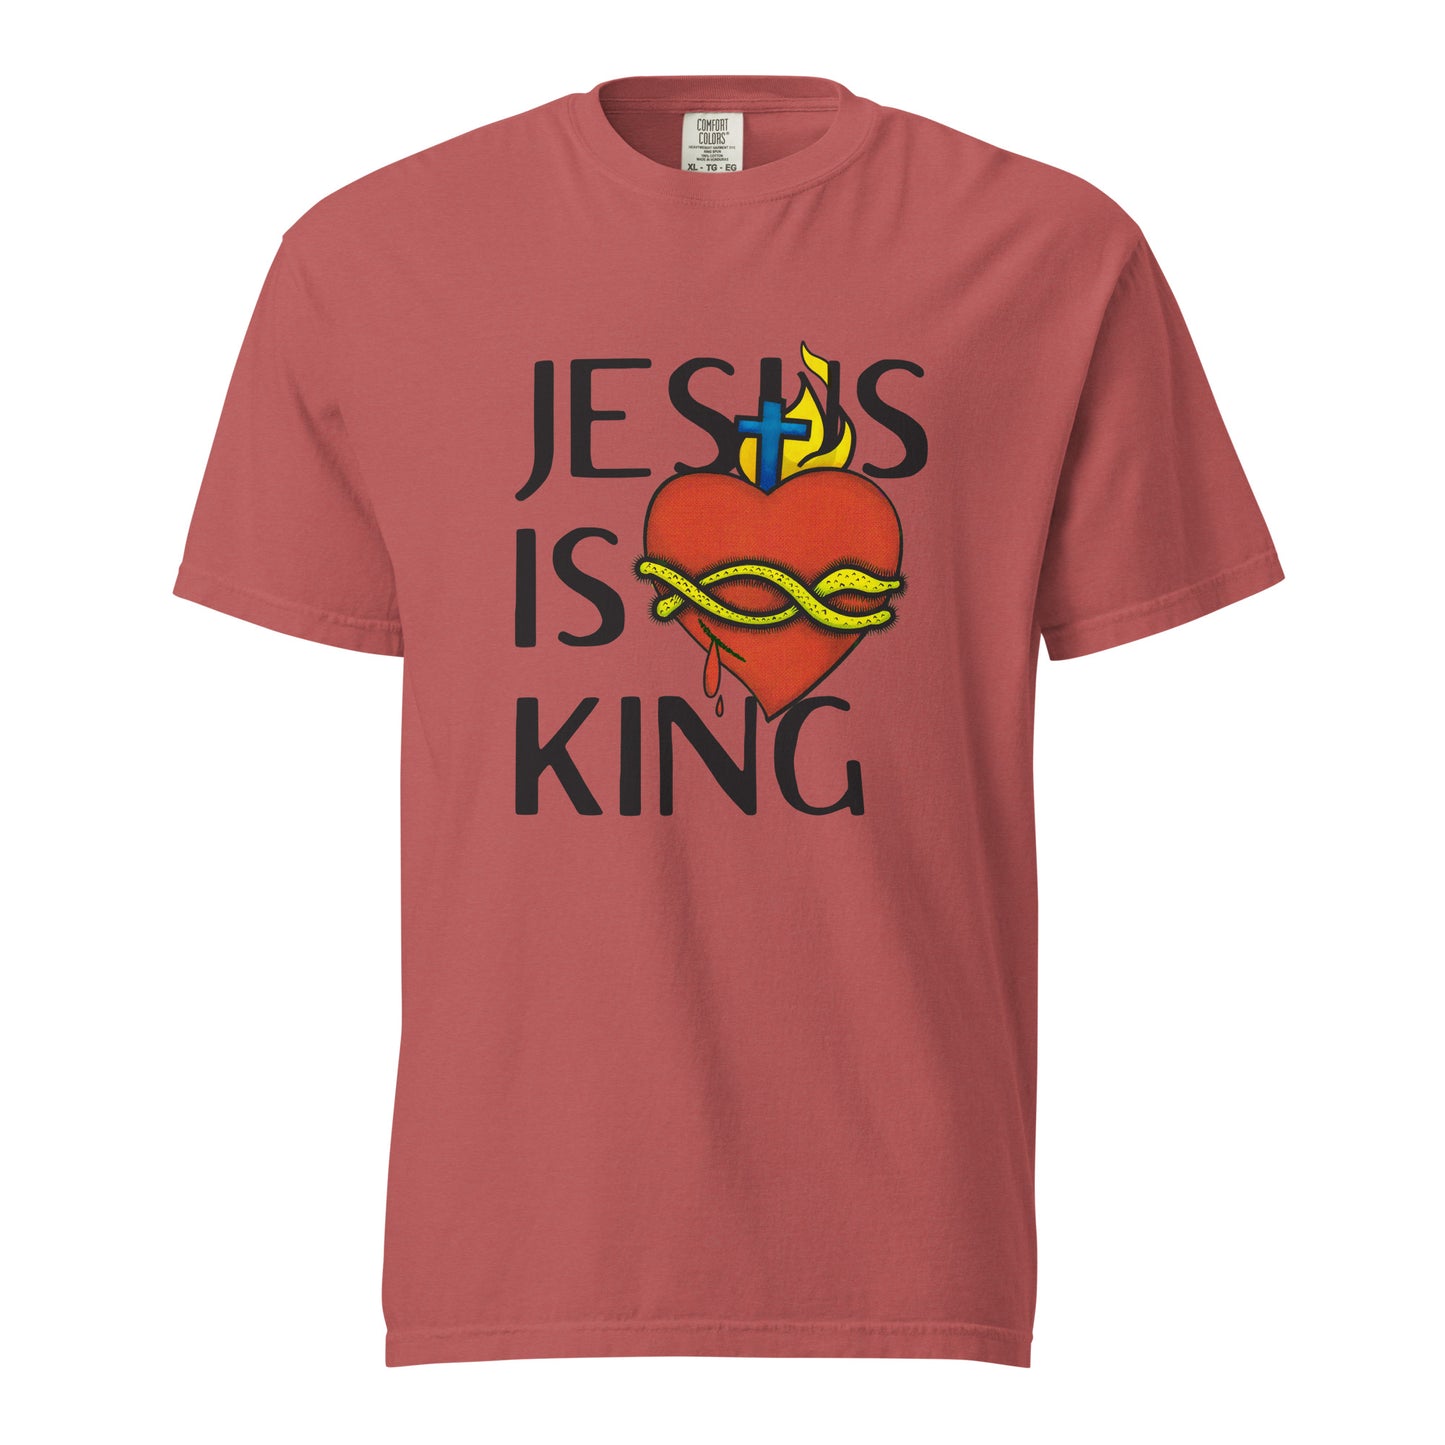 Jesus is King - Unisex garment-dyed heavyweight t-shirt